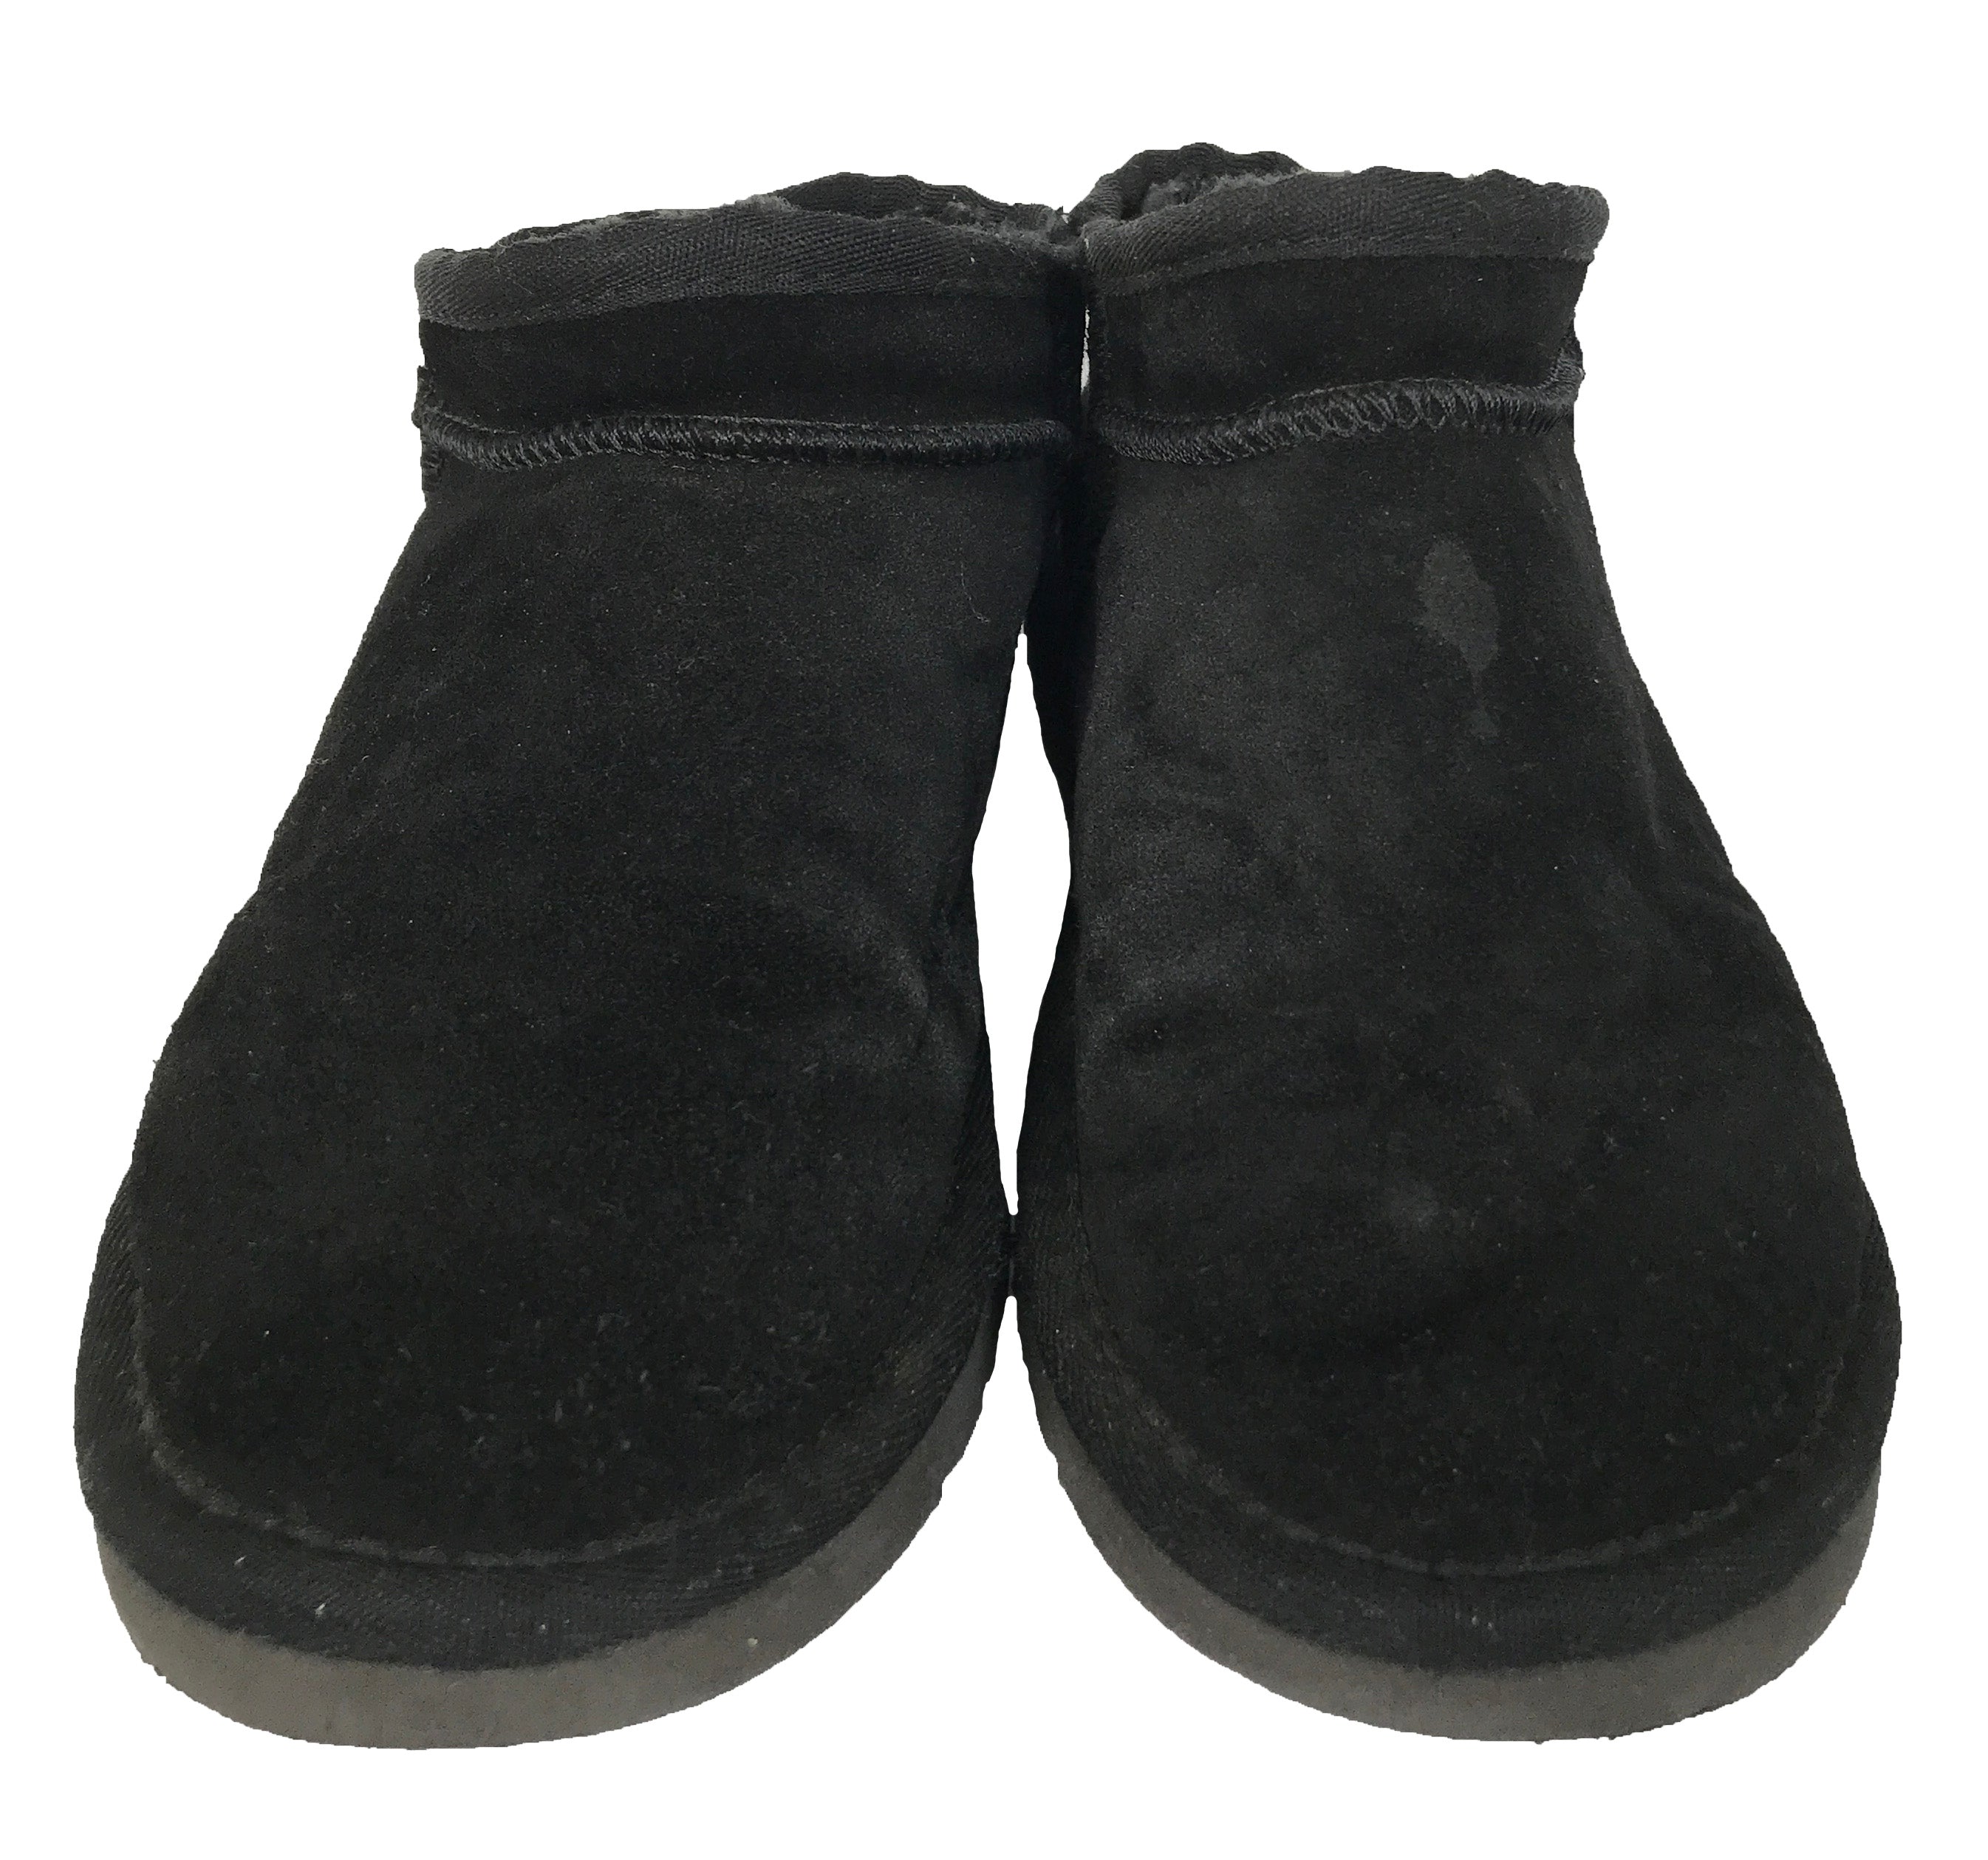 Ugg Classic Ultra Mini Black Boots Women's Size 7